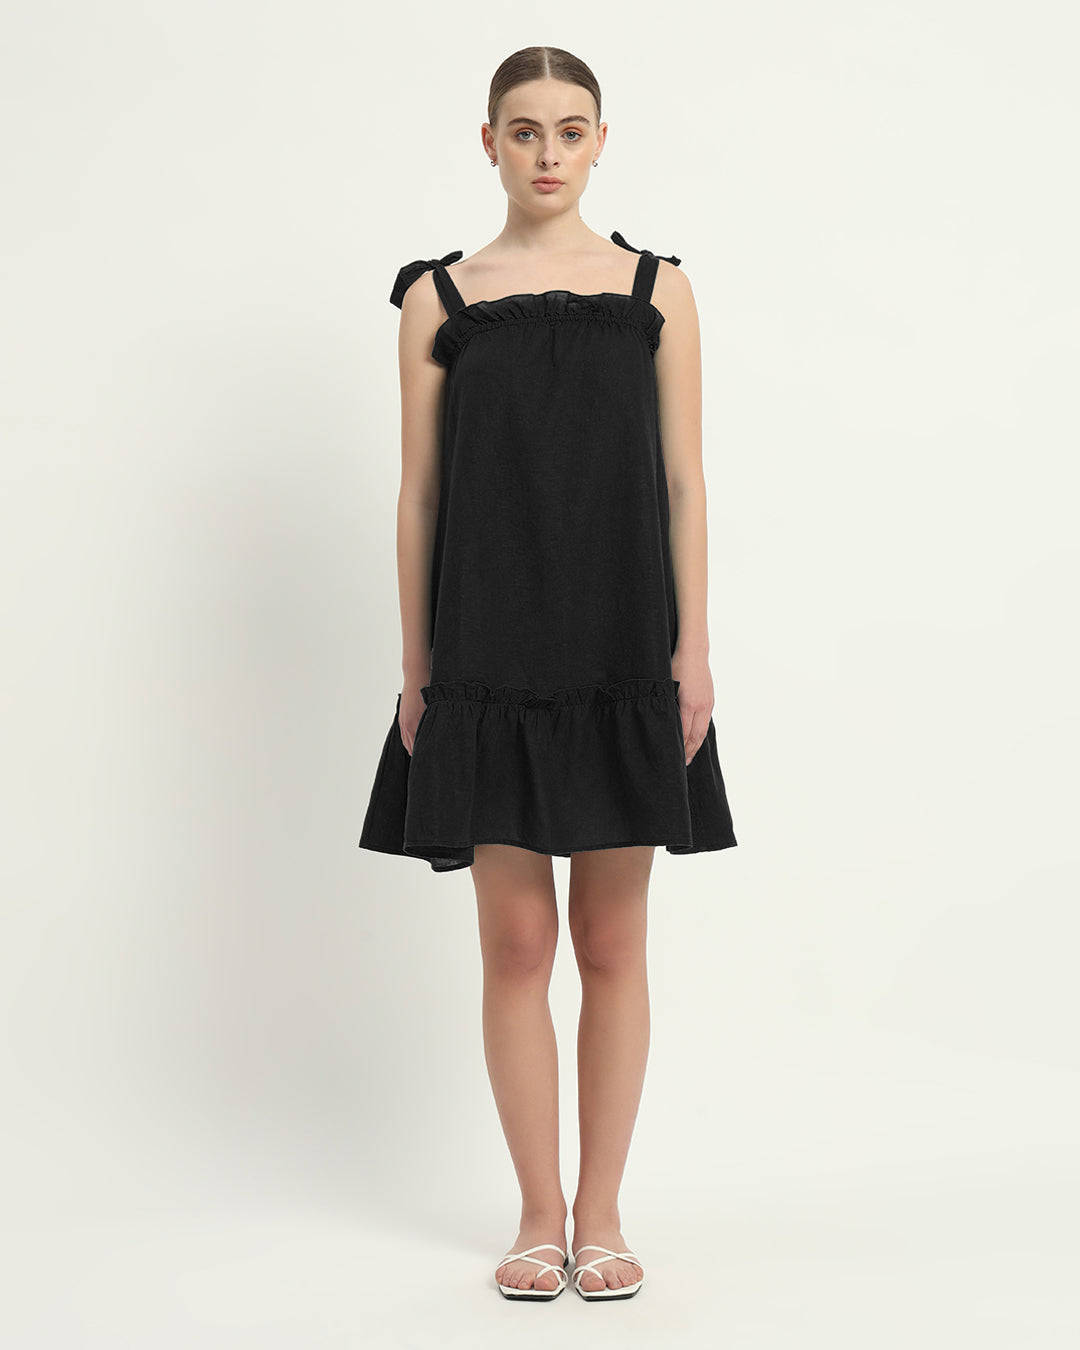 The Noir Amalfi Cotton Dress